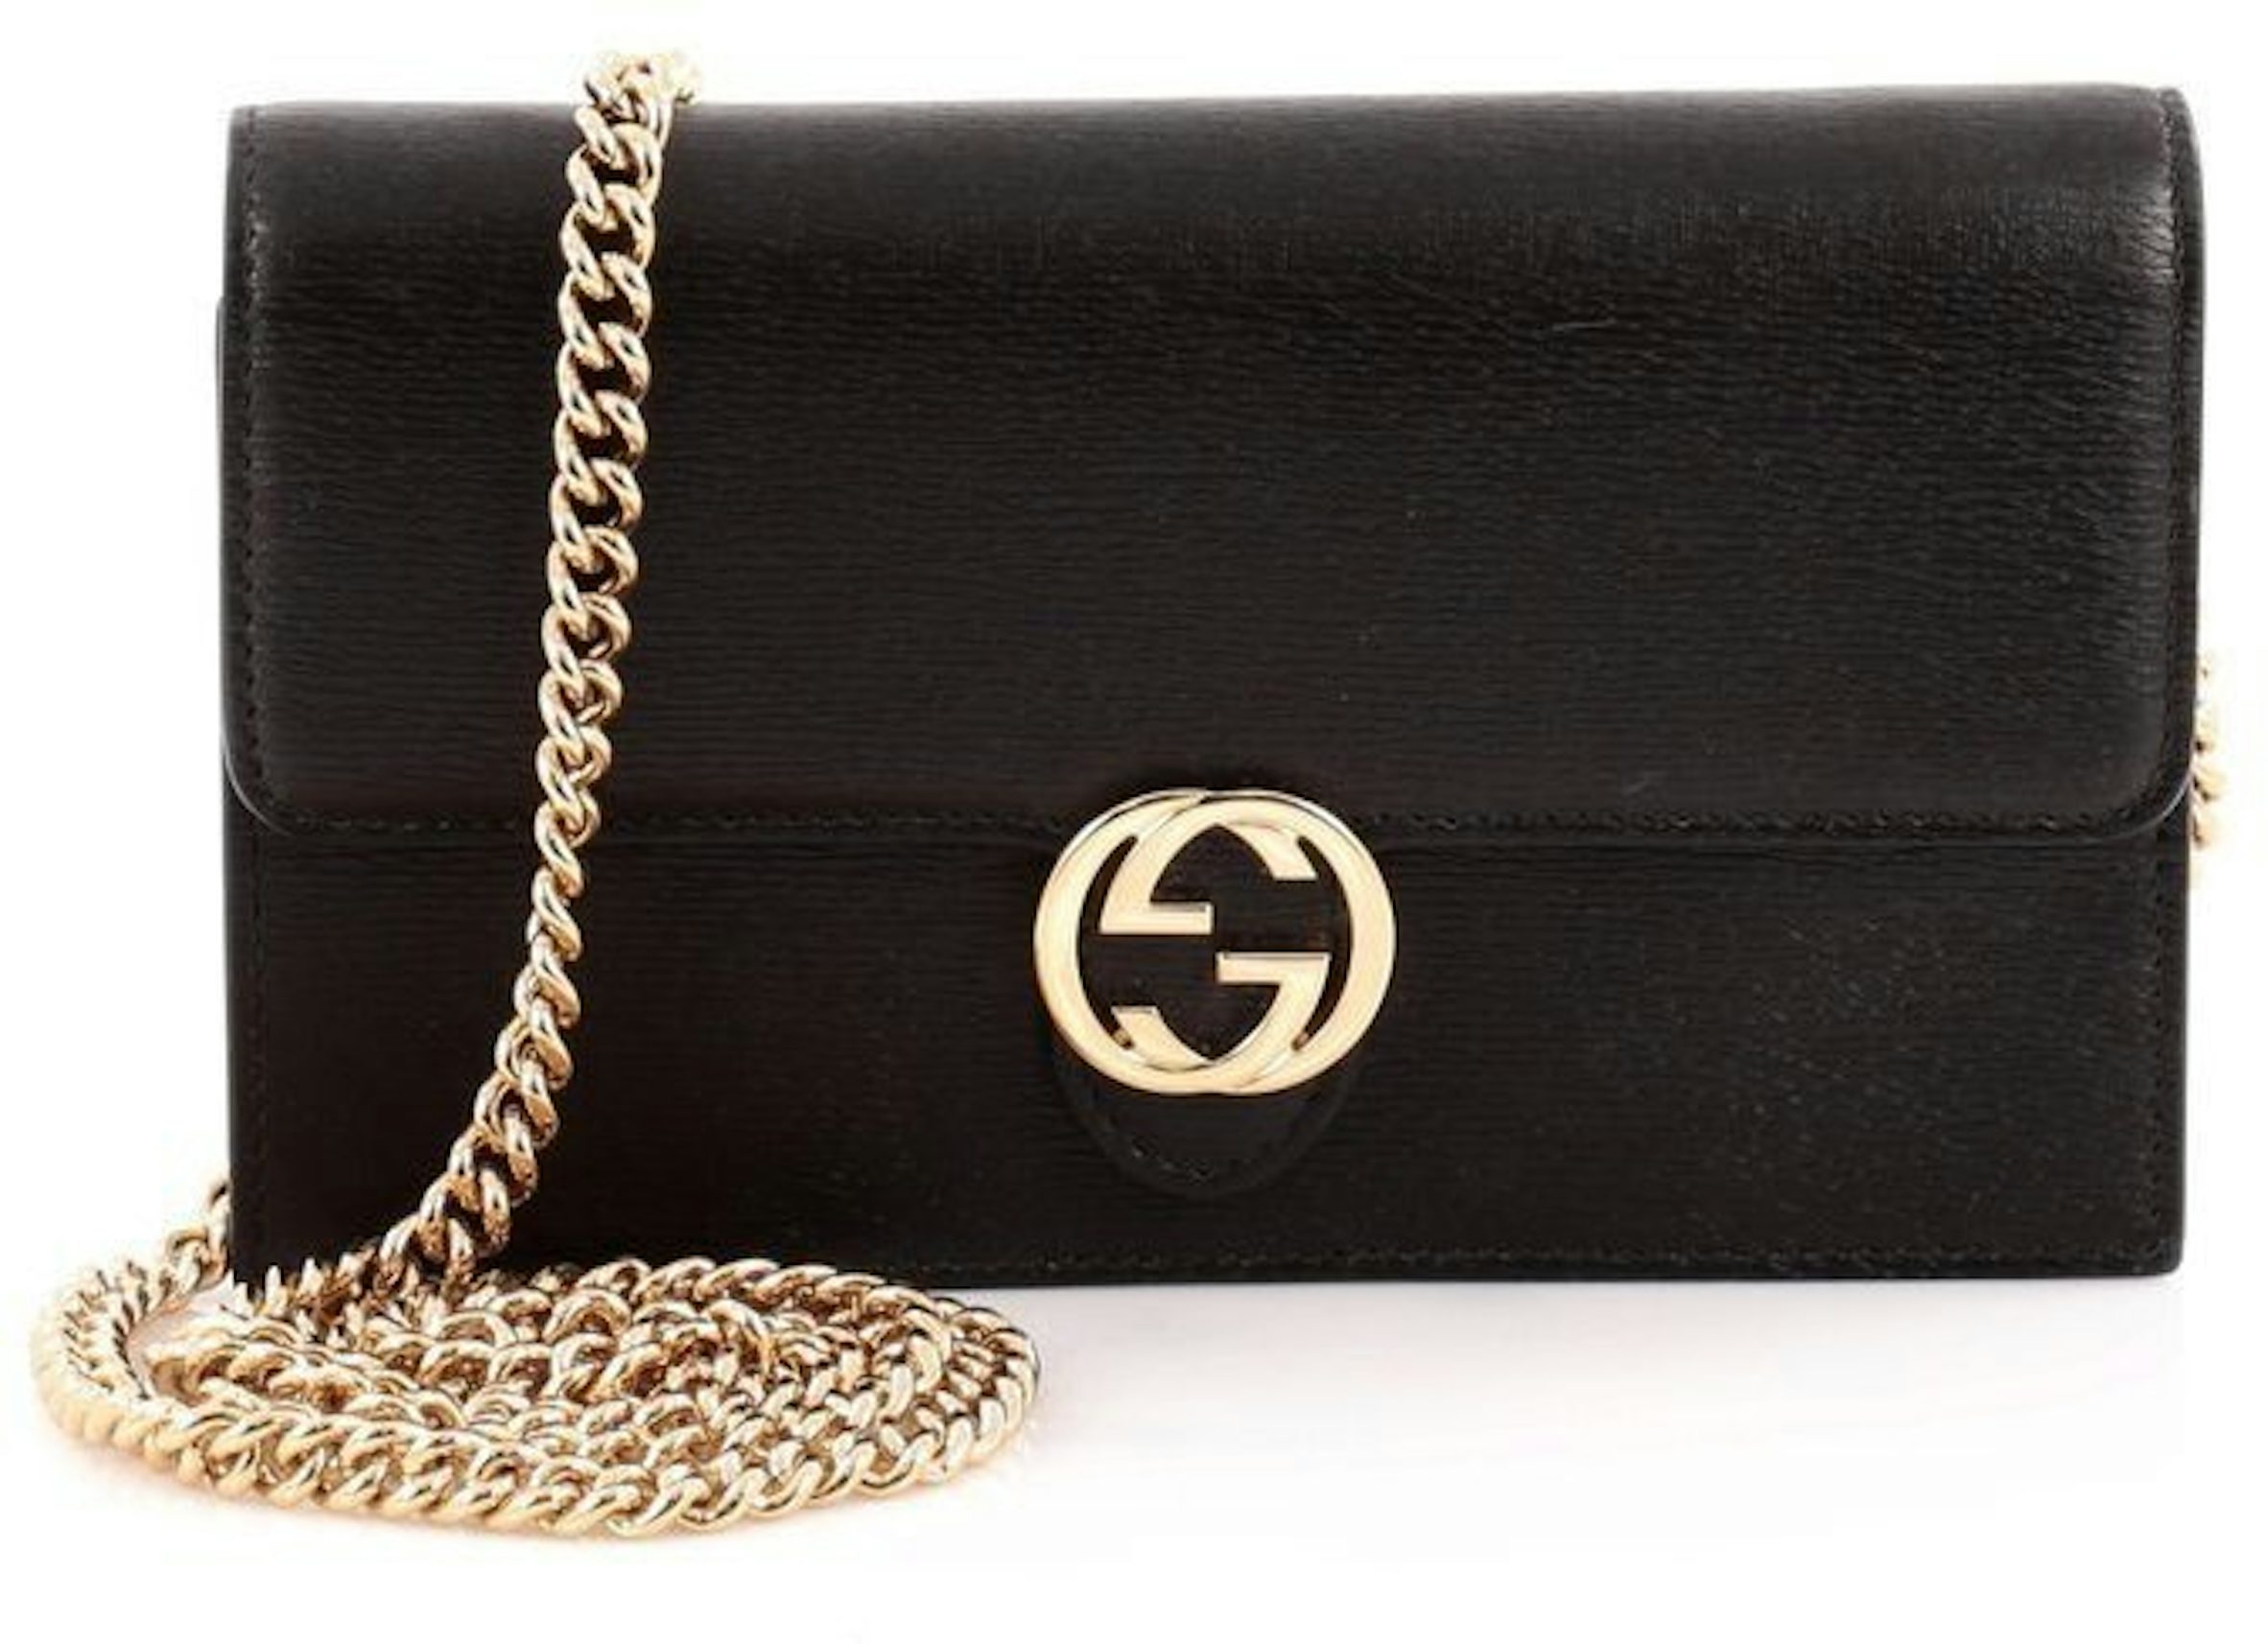 Gucci Interlocking GG Chain Crossbody Bag White